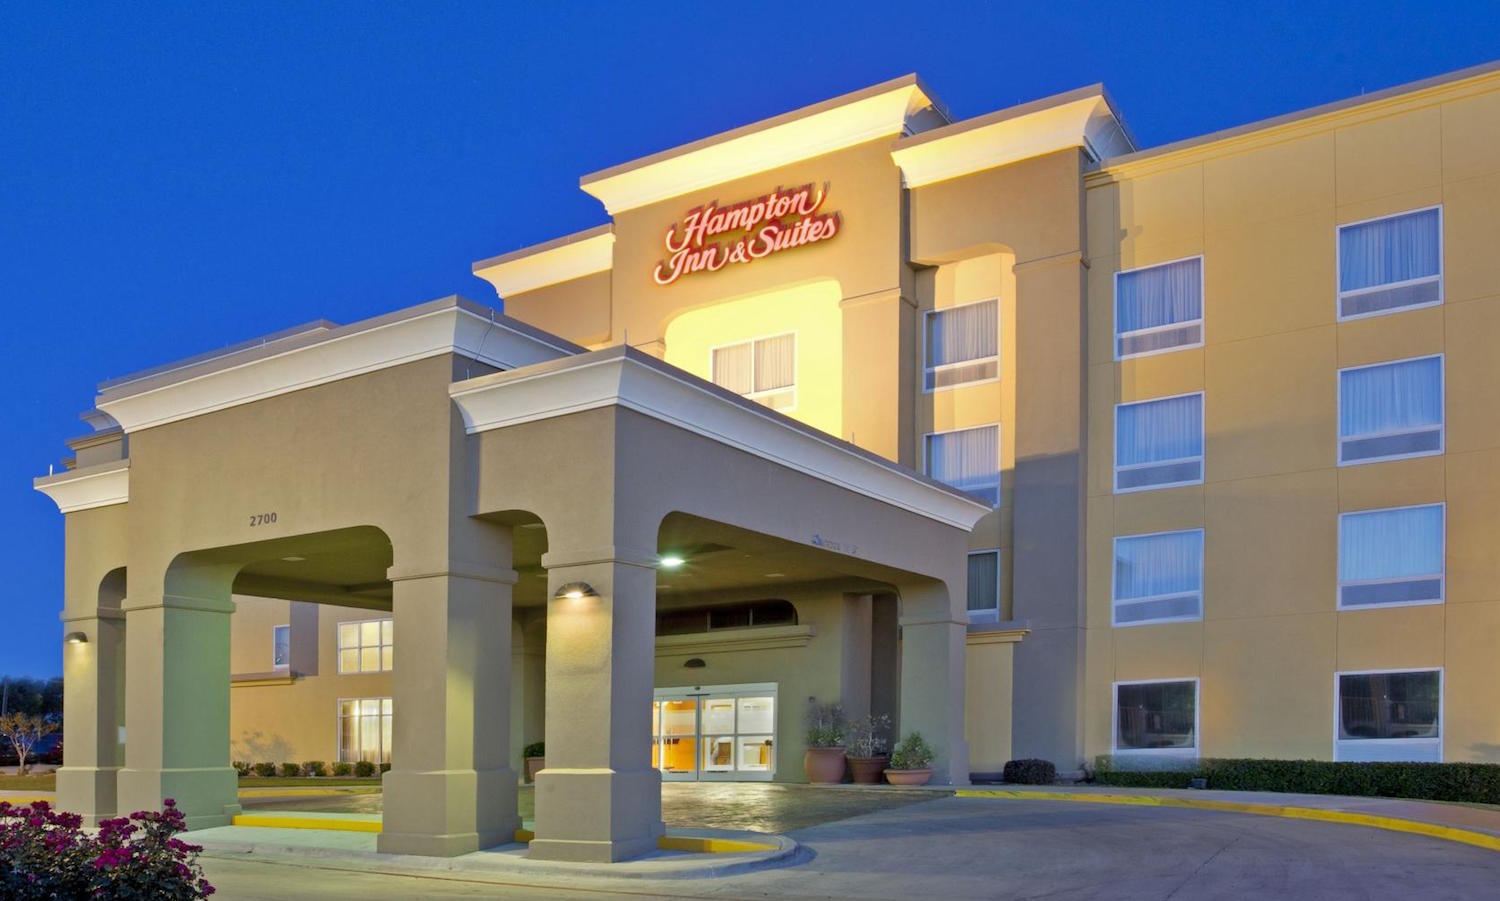 Photo of Hampton Inn & Suites Fort Worth West I-30, Fort Worth, TX